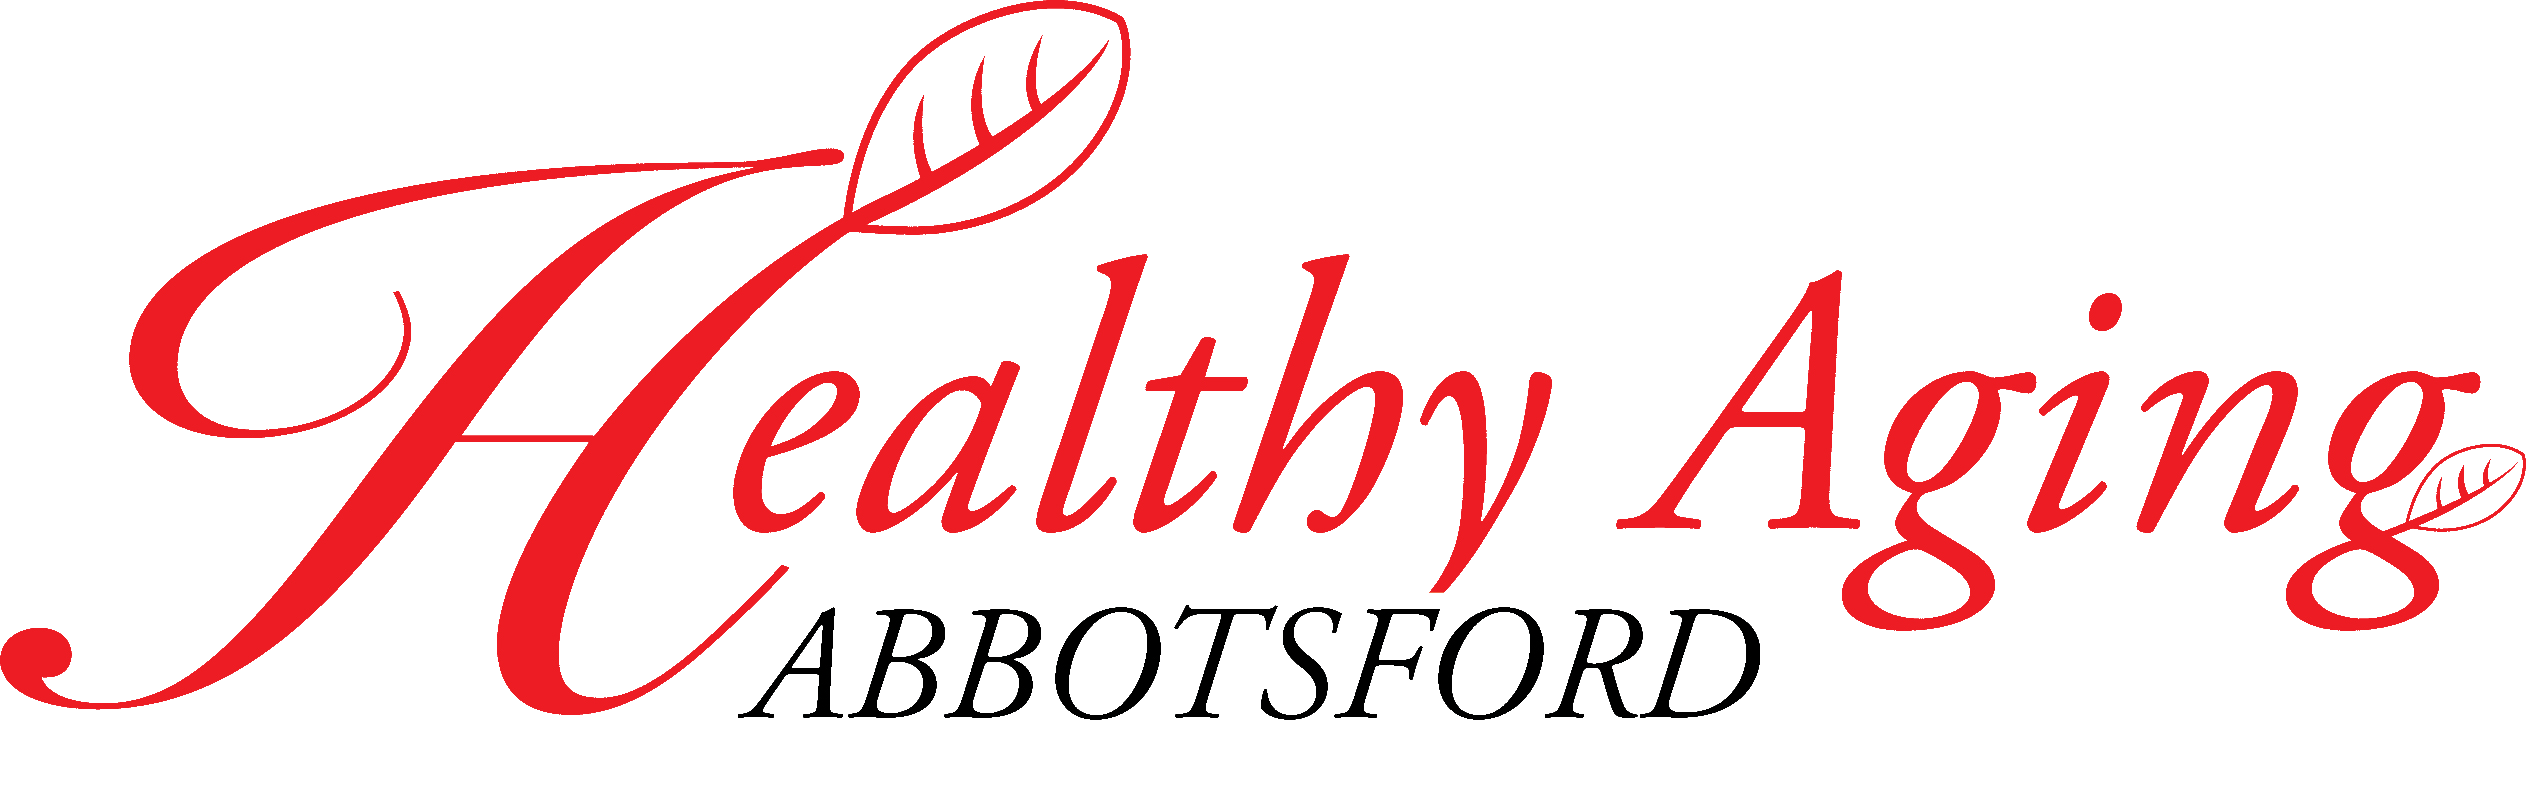 Abbotsford Association for Healthy Aging logo